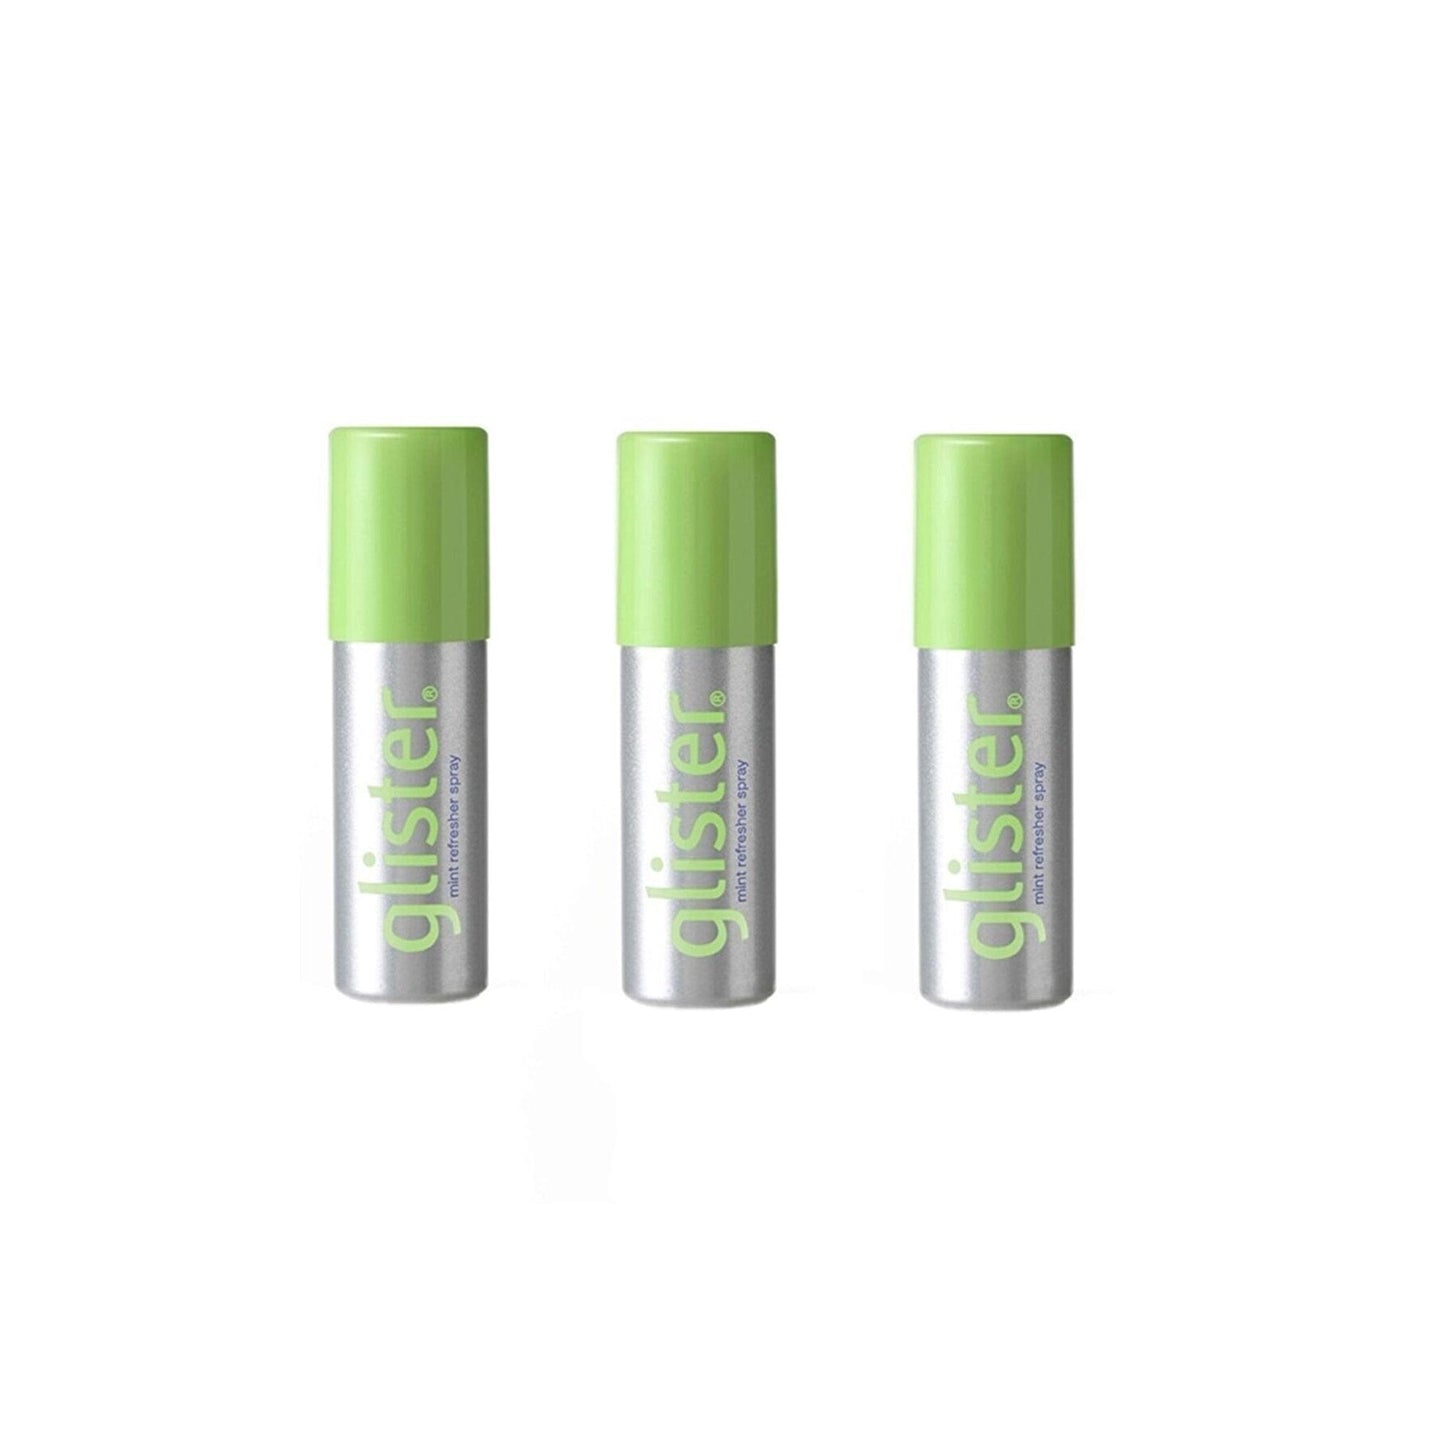 Amway Glister Refresher Spray 3-Pack, Glister Mouth Freshener Spray (Mint)